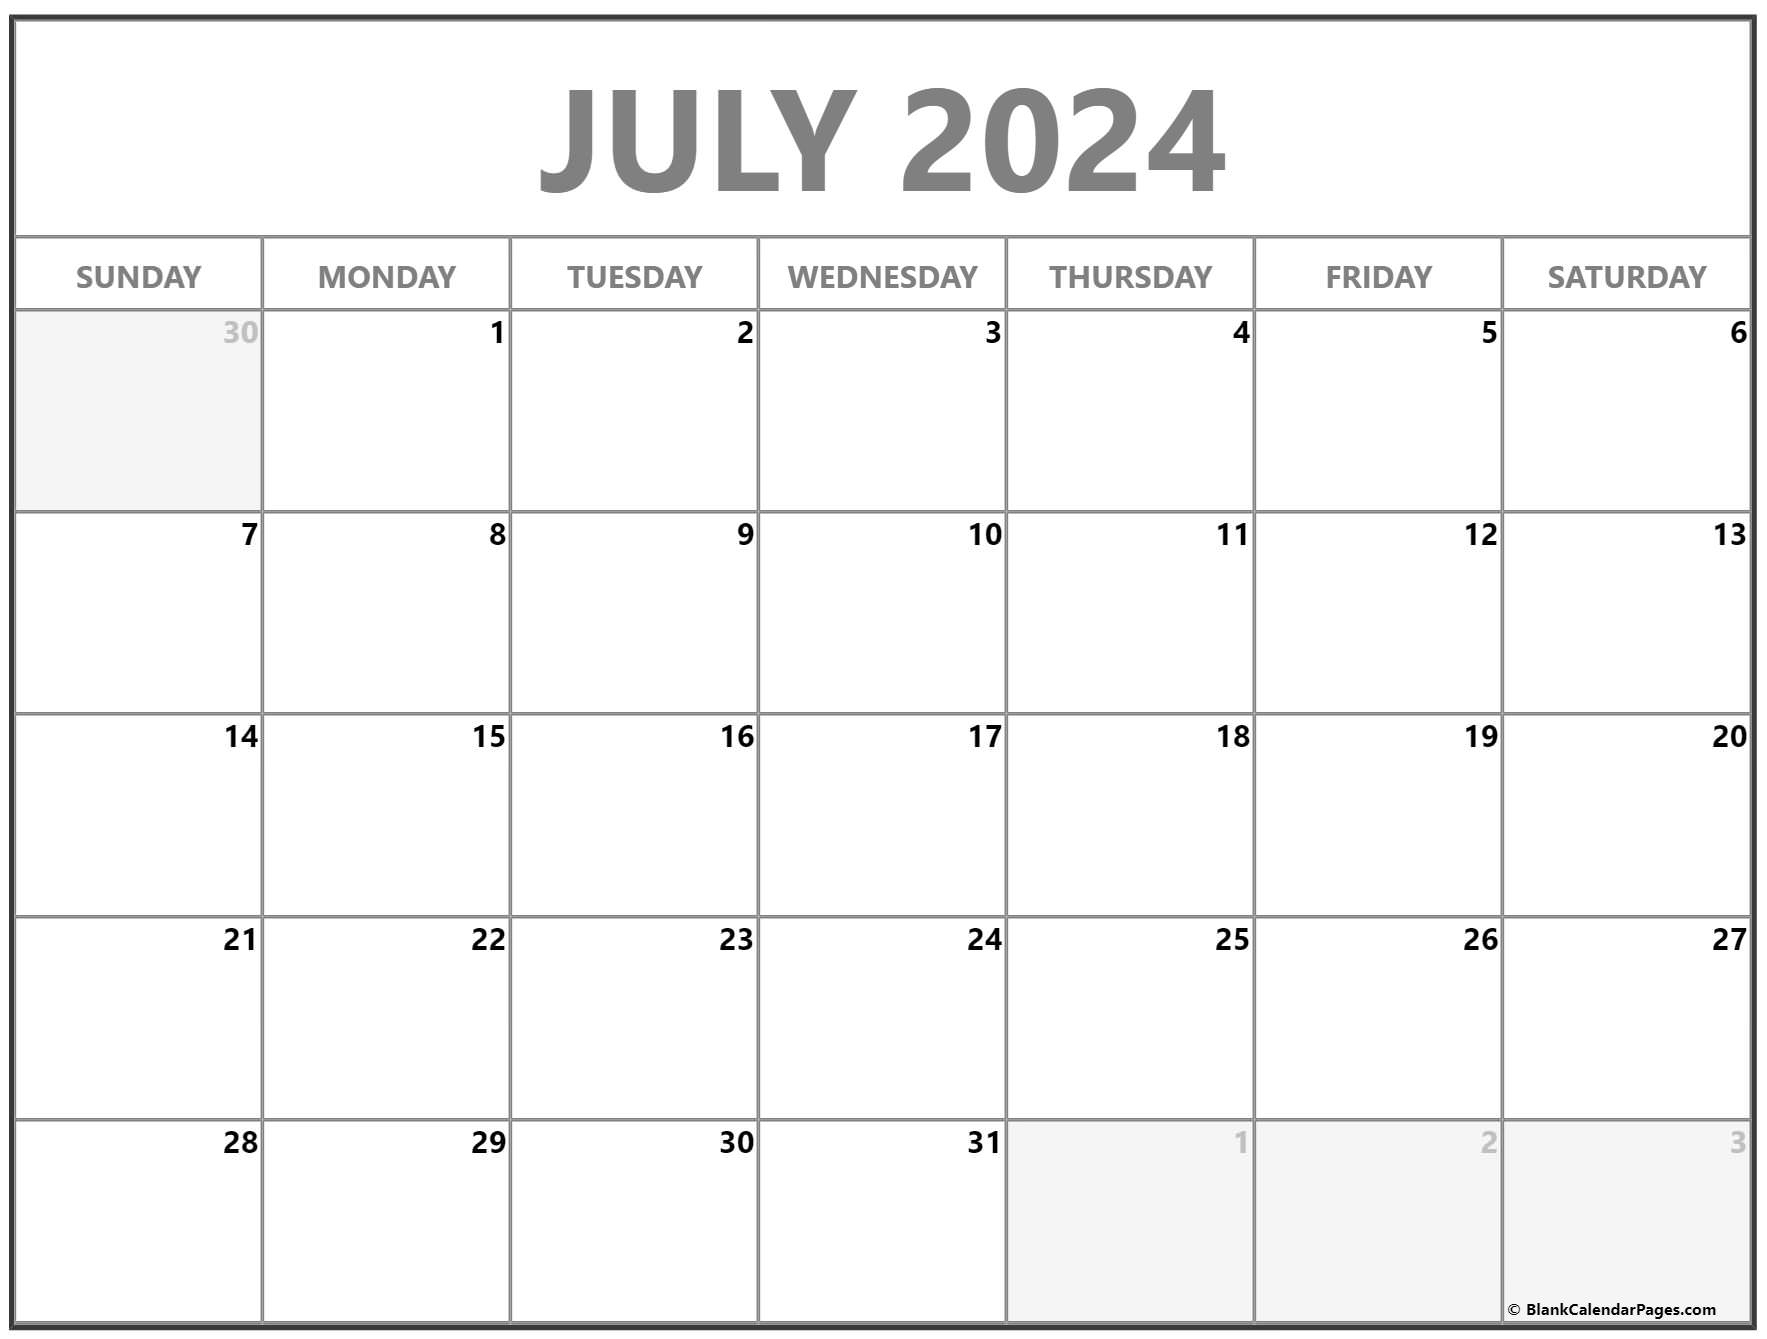 July 2024 Calendar | Free Printable Calendar | Show Calendar Of July 2024